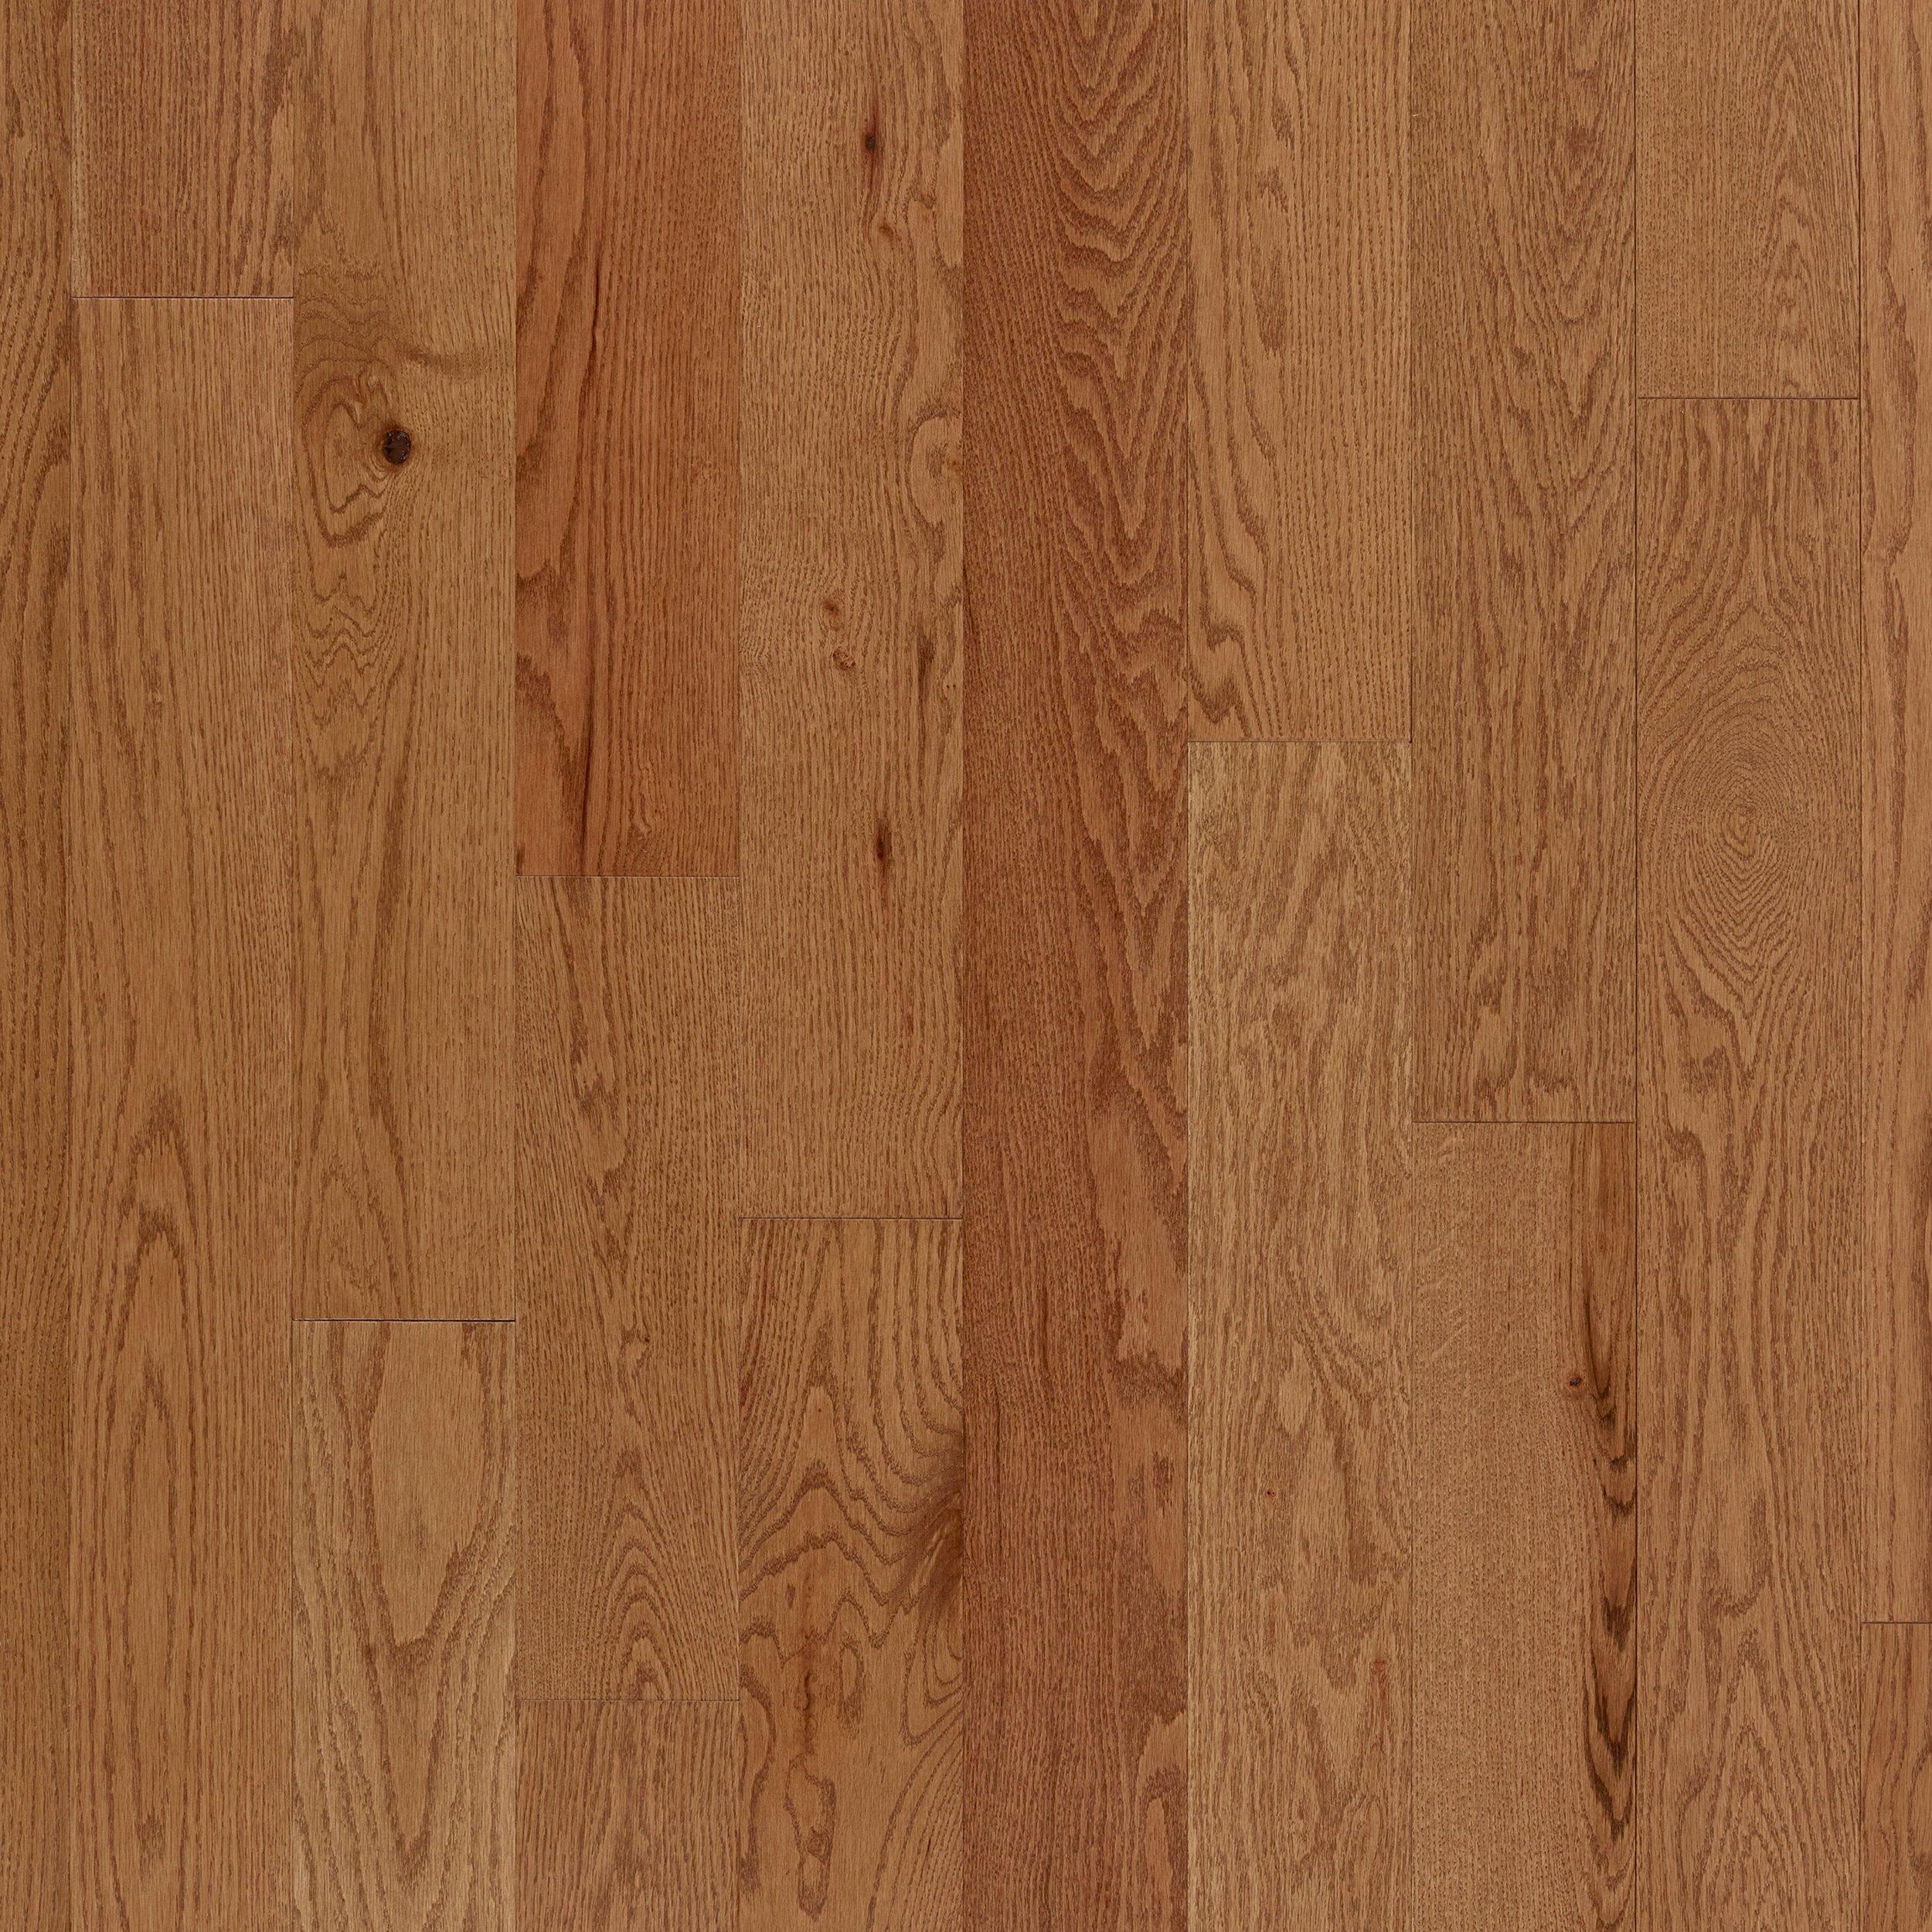 Eifert Red Oak Smooth Engineered Hardwood